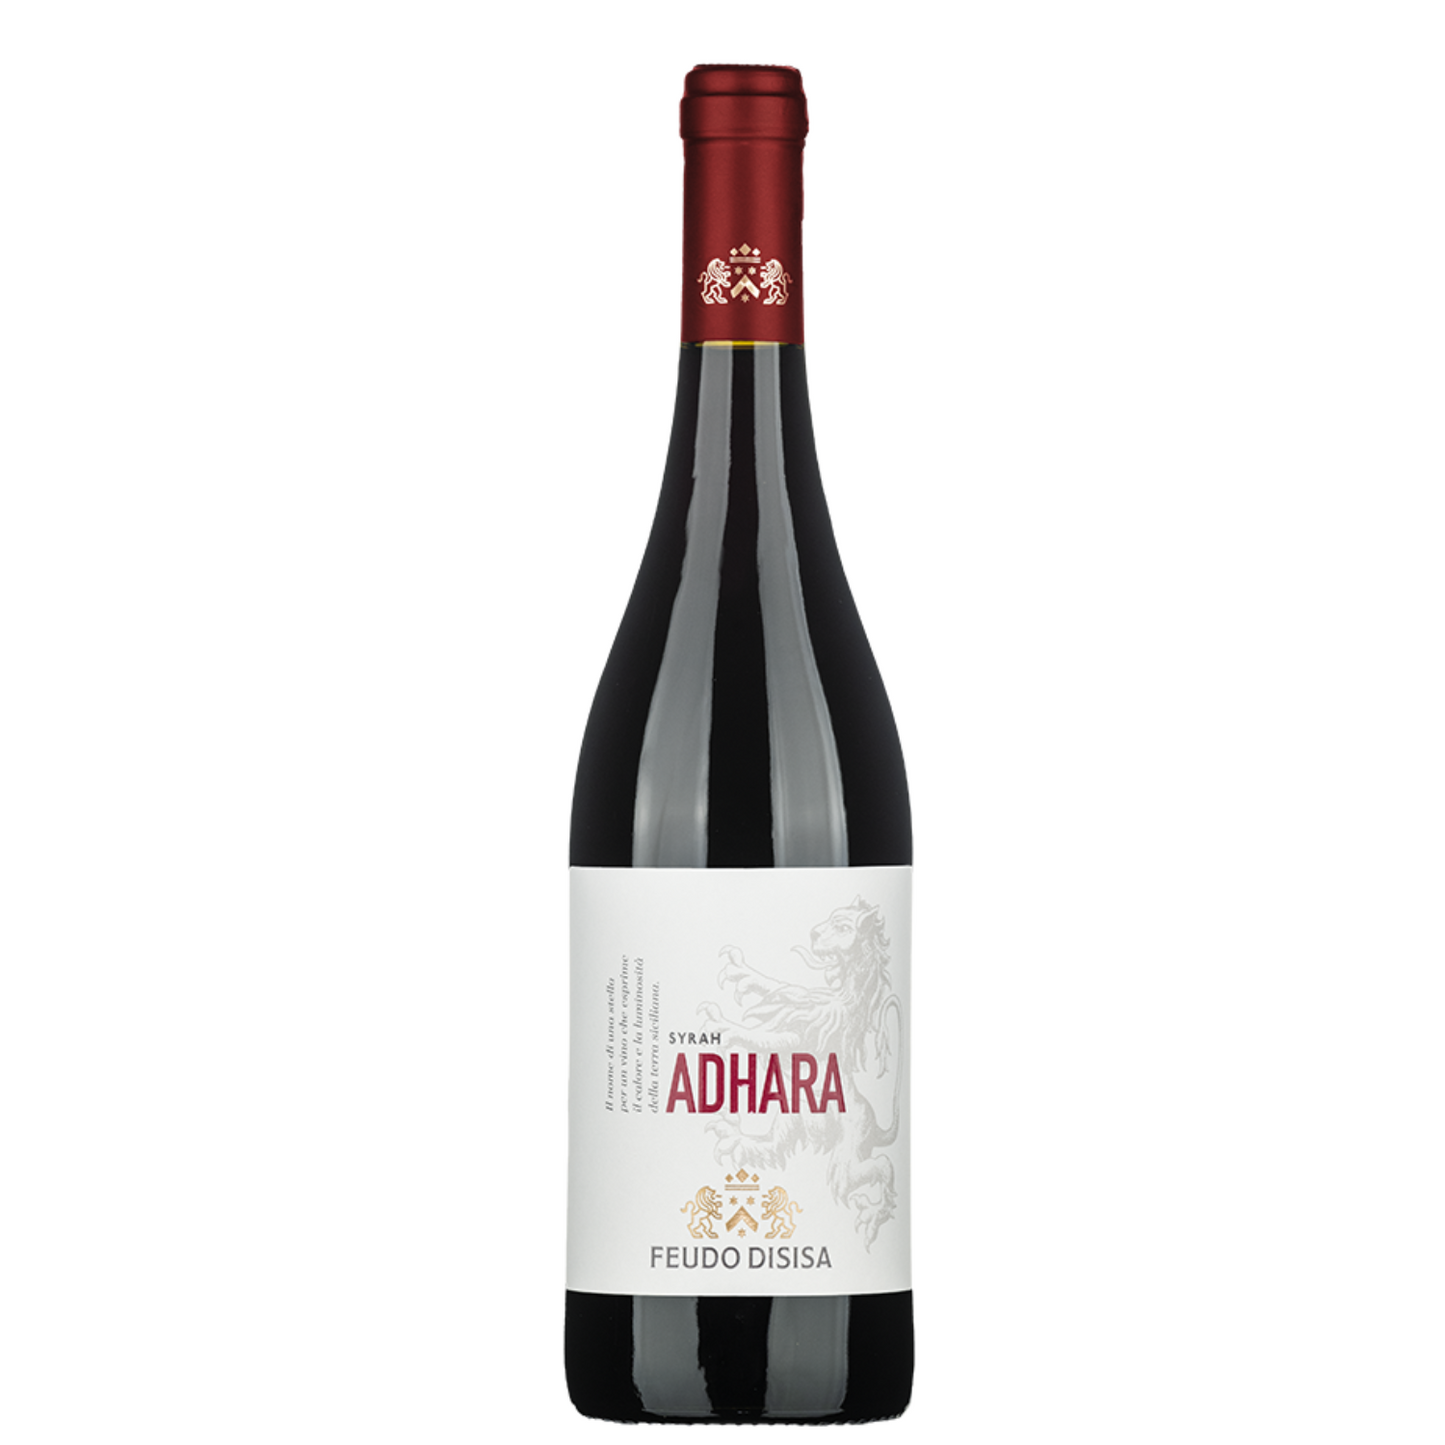 6 Bottles of Adhara Red Wine from Sicily - Feudo Disisa